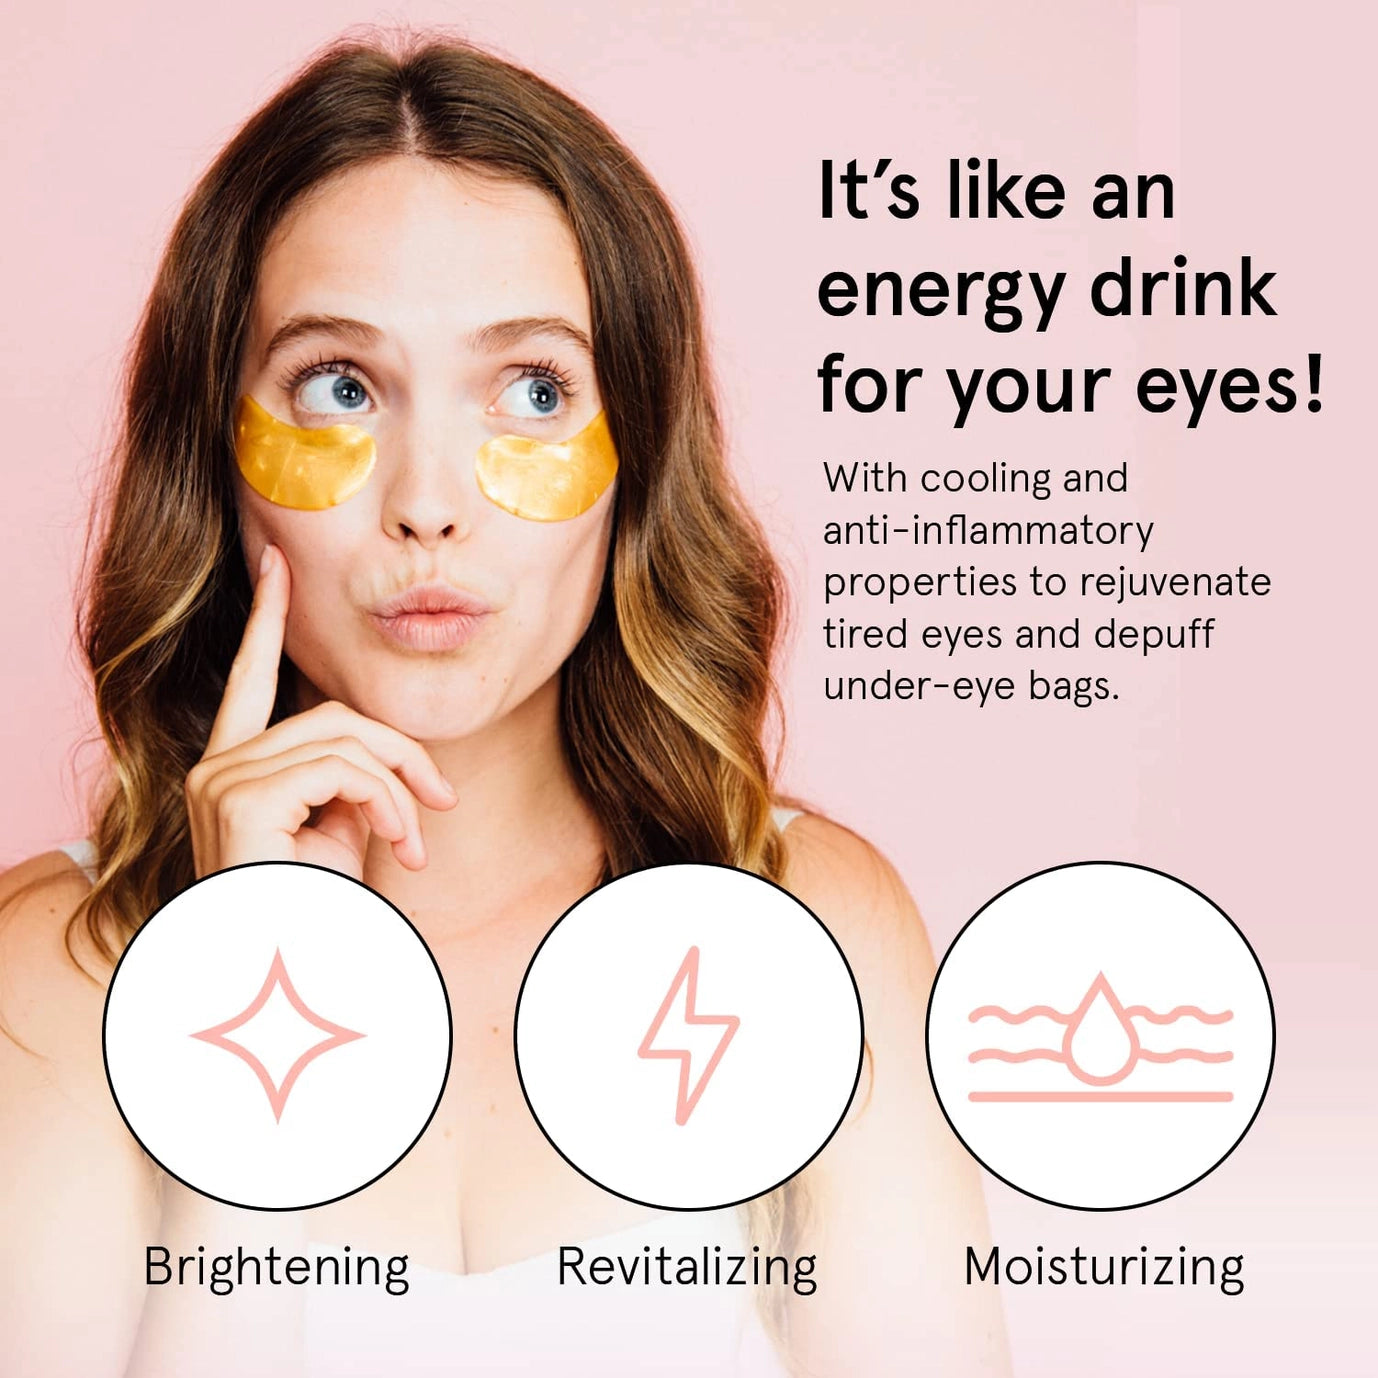 Gold Energizing Under Eye Masks (24 Pairs) - Healthy Gal